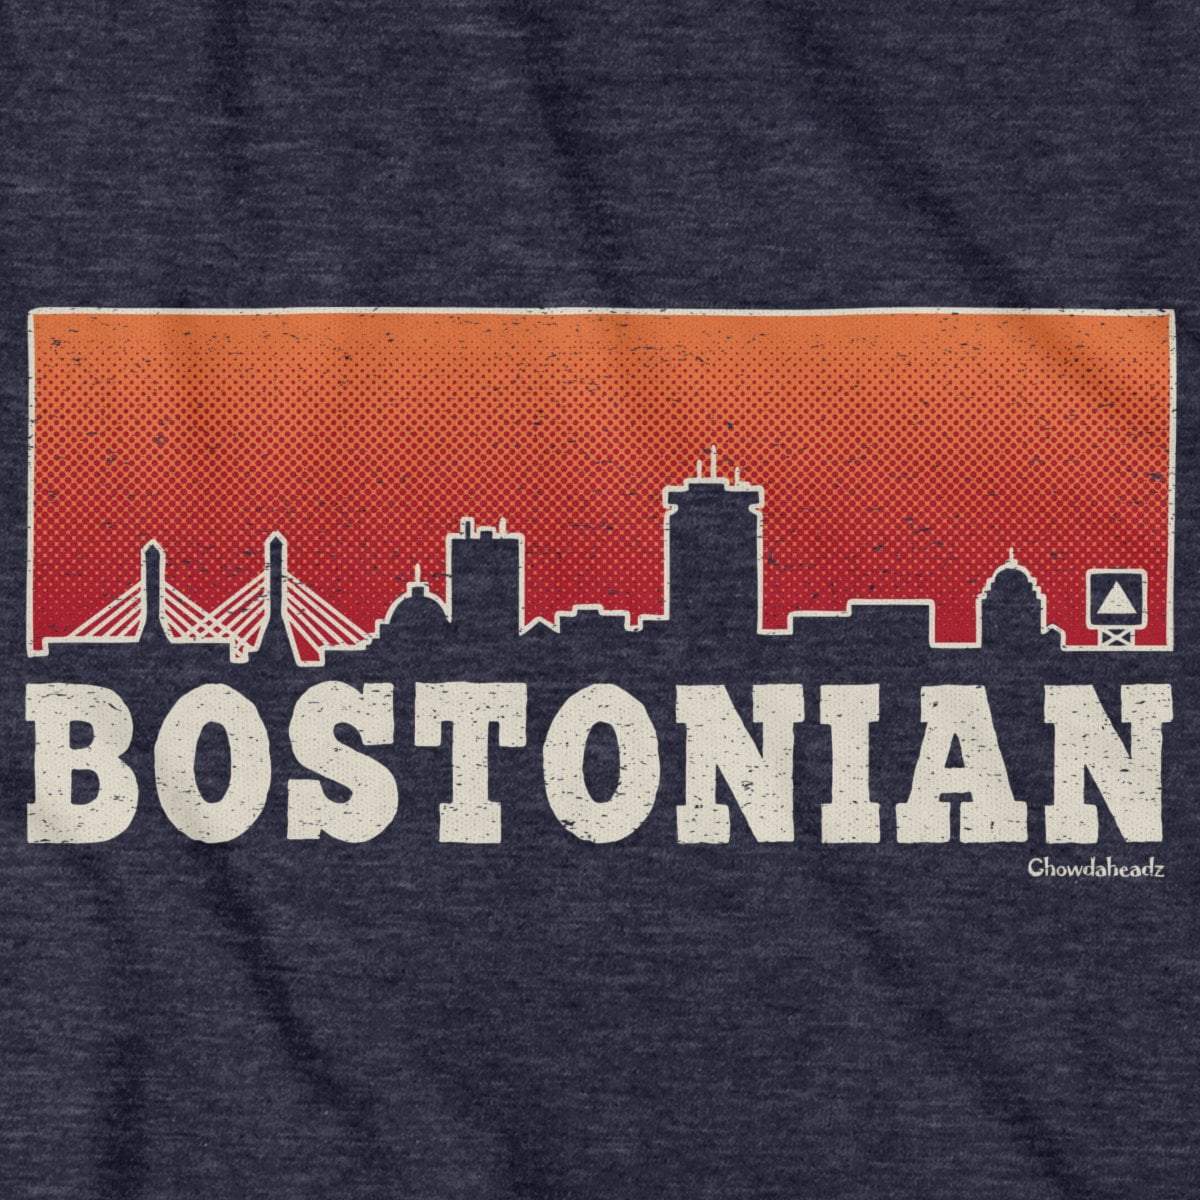 Bostonian Skyline T-Shirt - Chowdaheadz